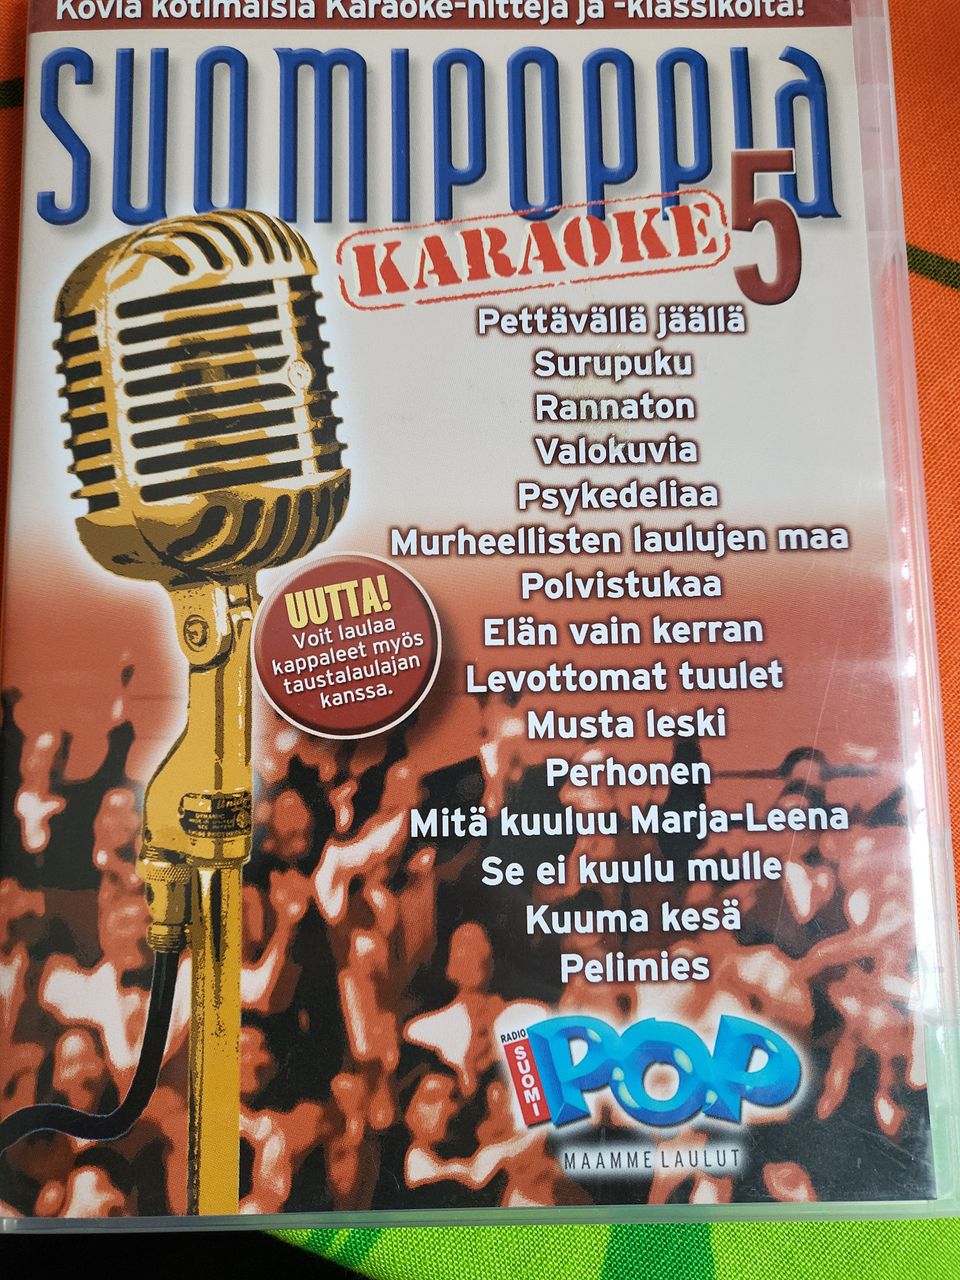 Suomipoppia karaoke 5 DVD